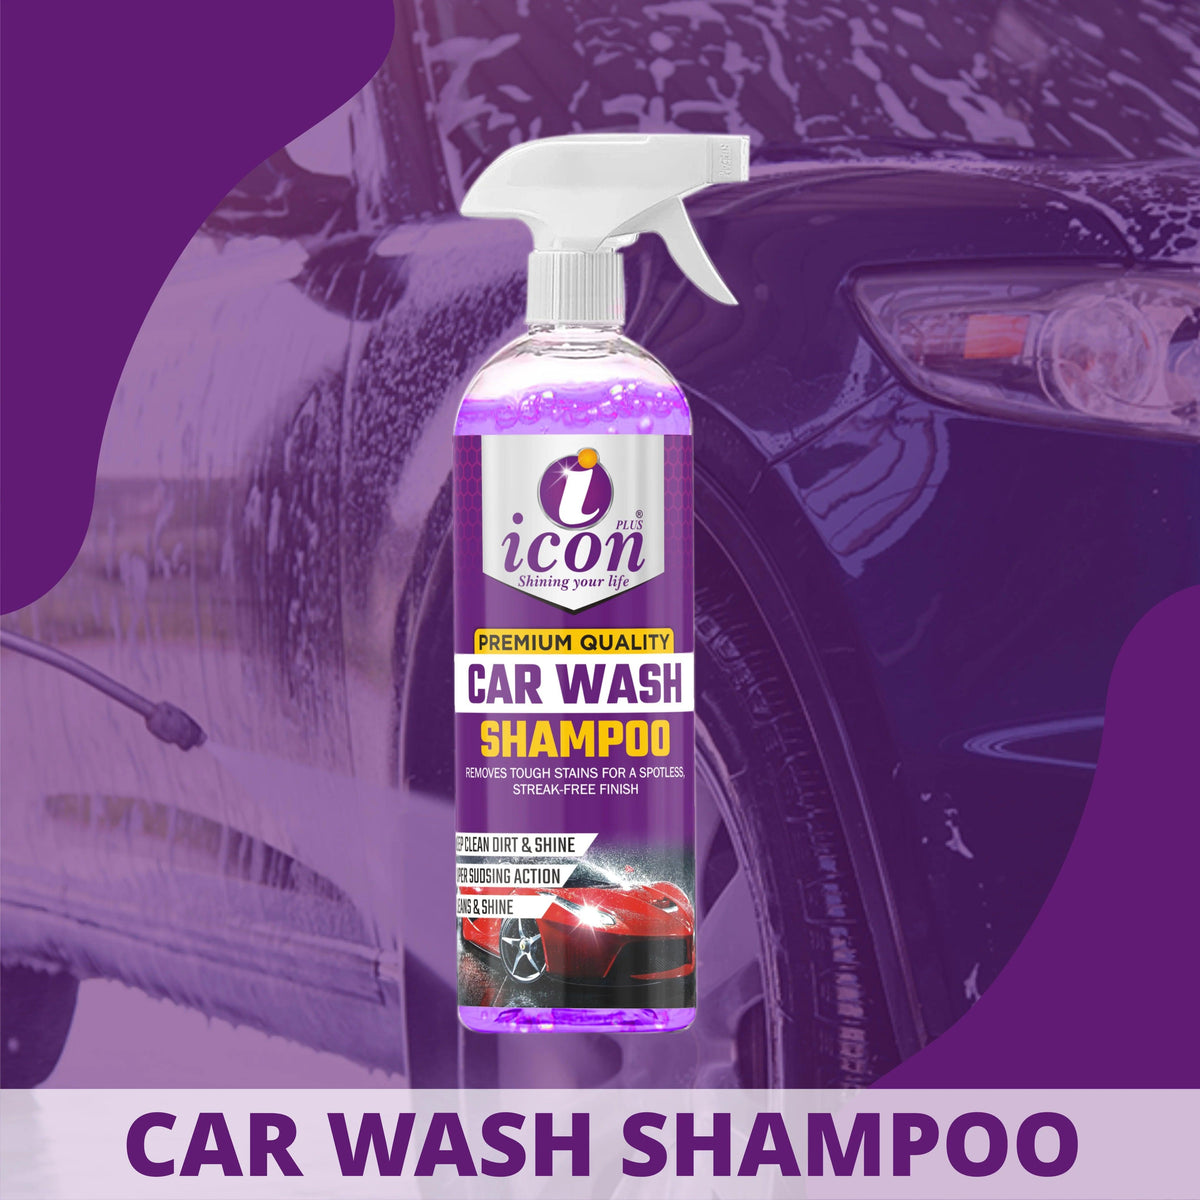 Premium quality car wash shampoo